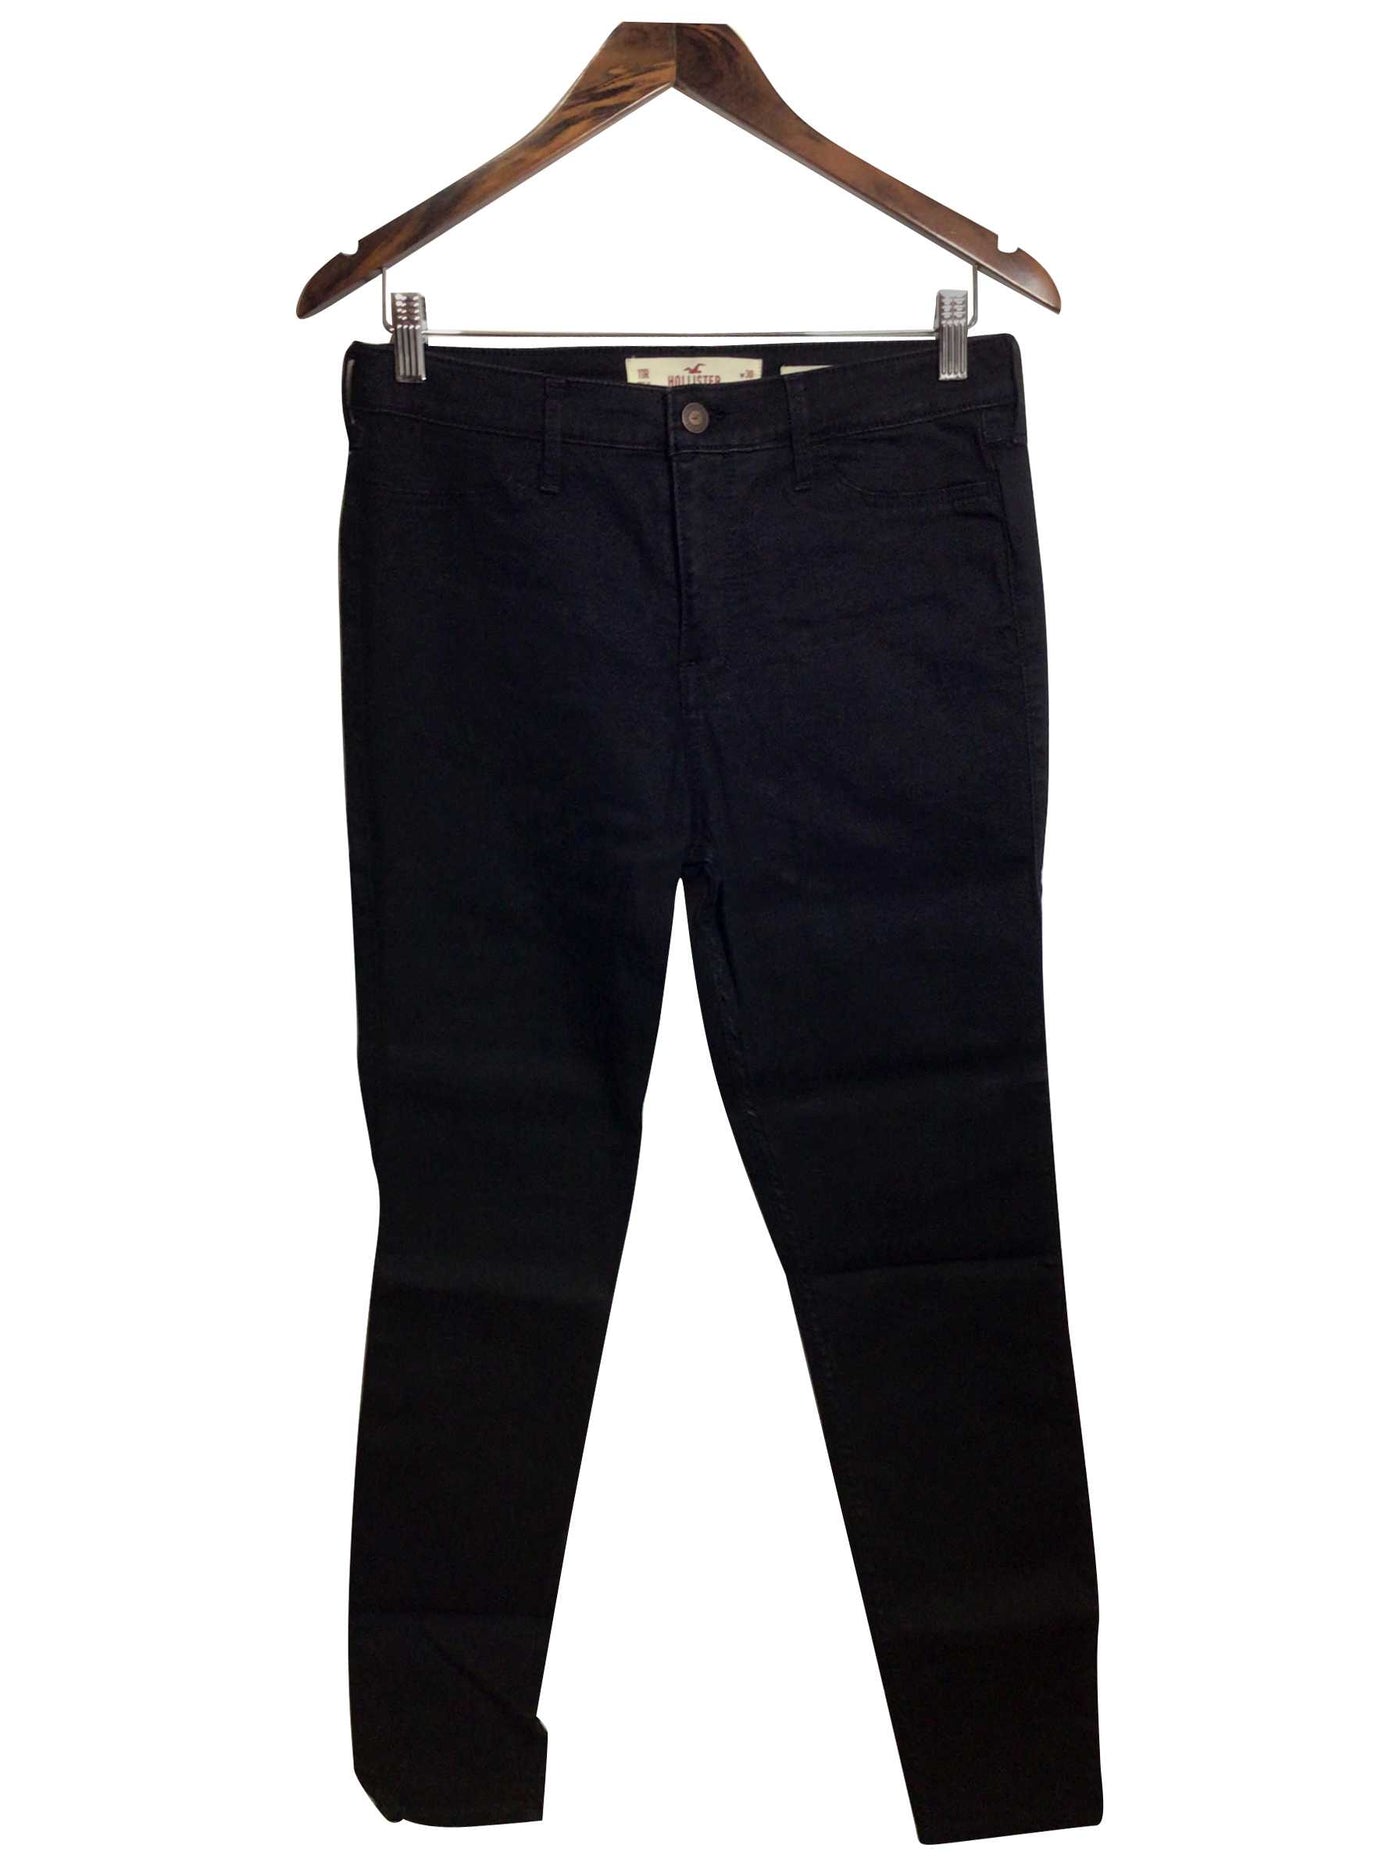 HOLLISTER Regular fit Straight-legged Jeans in Black - Size 30x28 | 15.95 $ KOOP